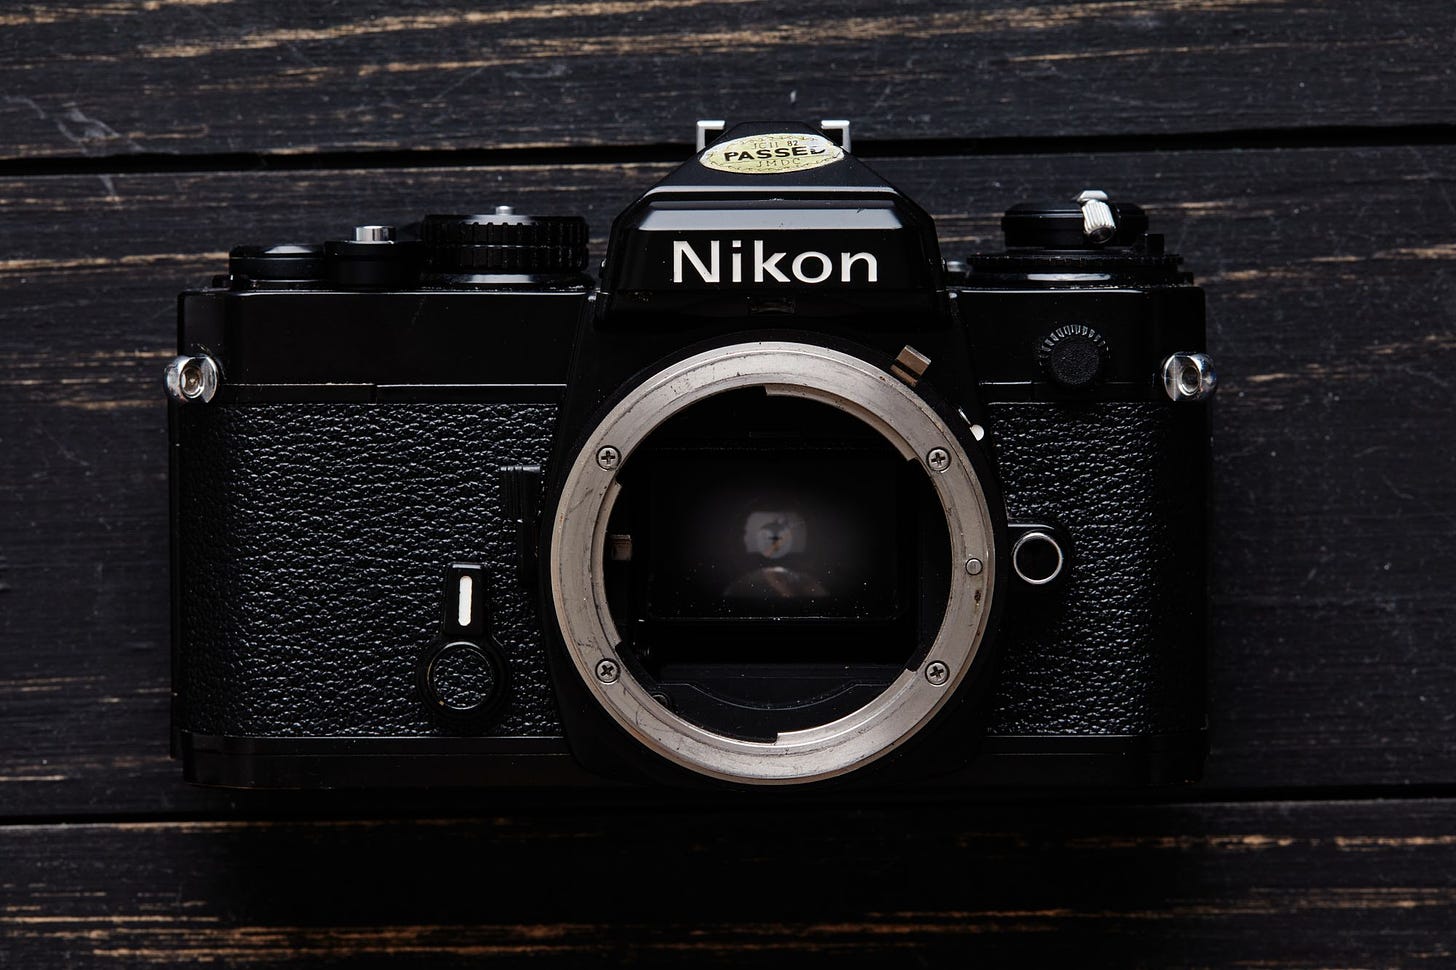 The Nikon FE